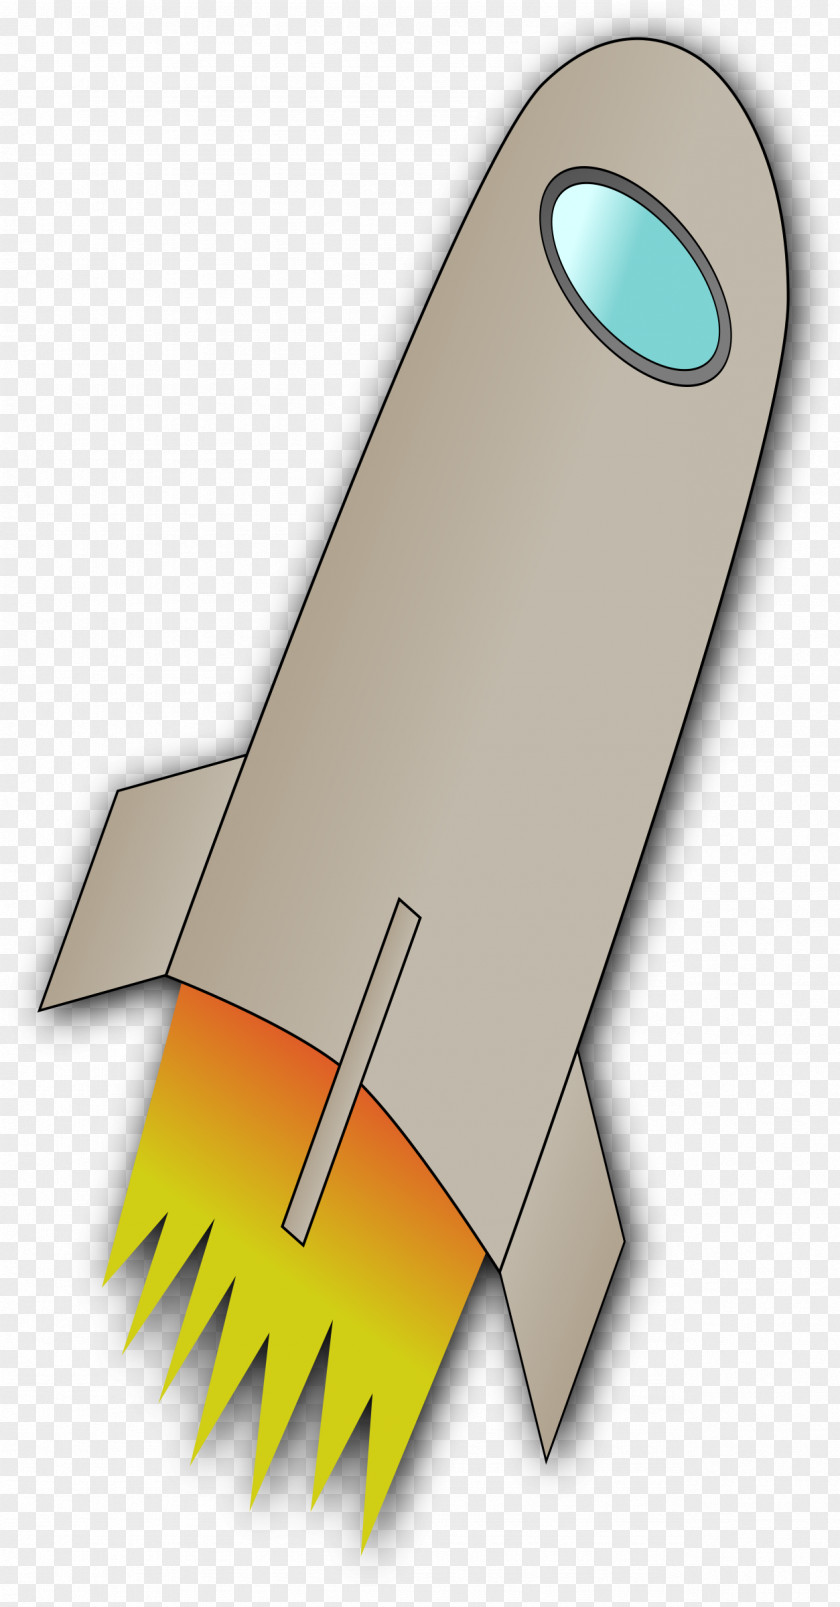 Rockets Spacecraft Rocket Launch Clip Art PNG